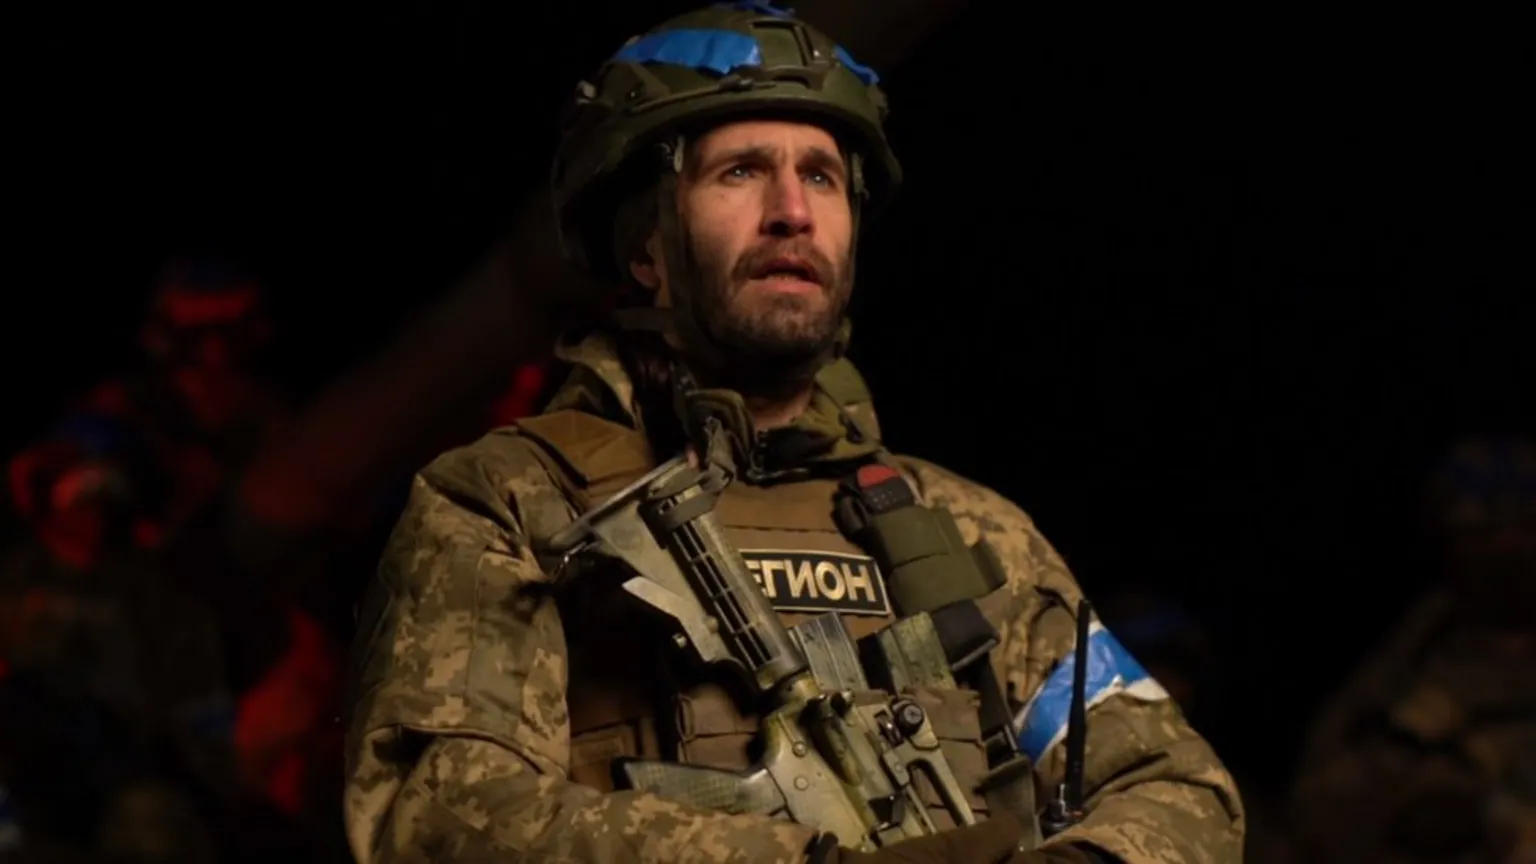 Ukranian-based Russian armed groups claim raids into Russia